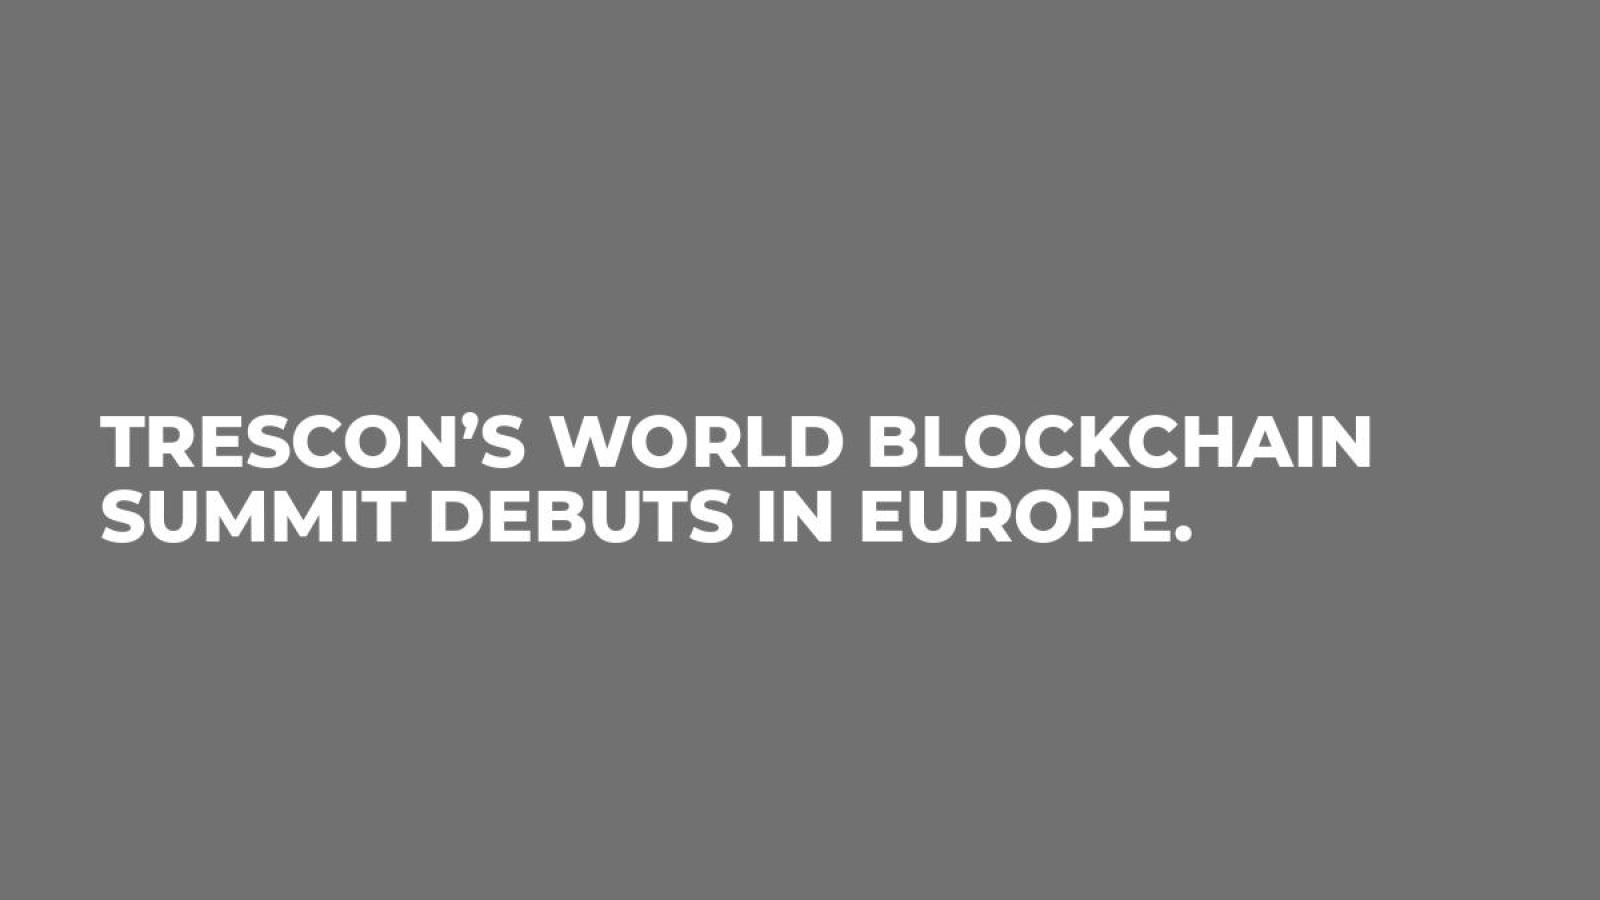 Trescon’s World Blockchain Summit Debuts in Europe.